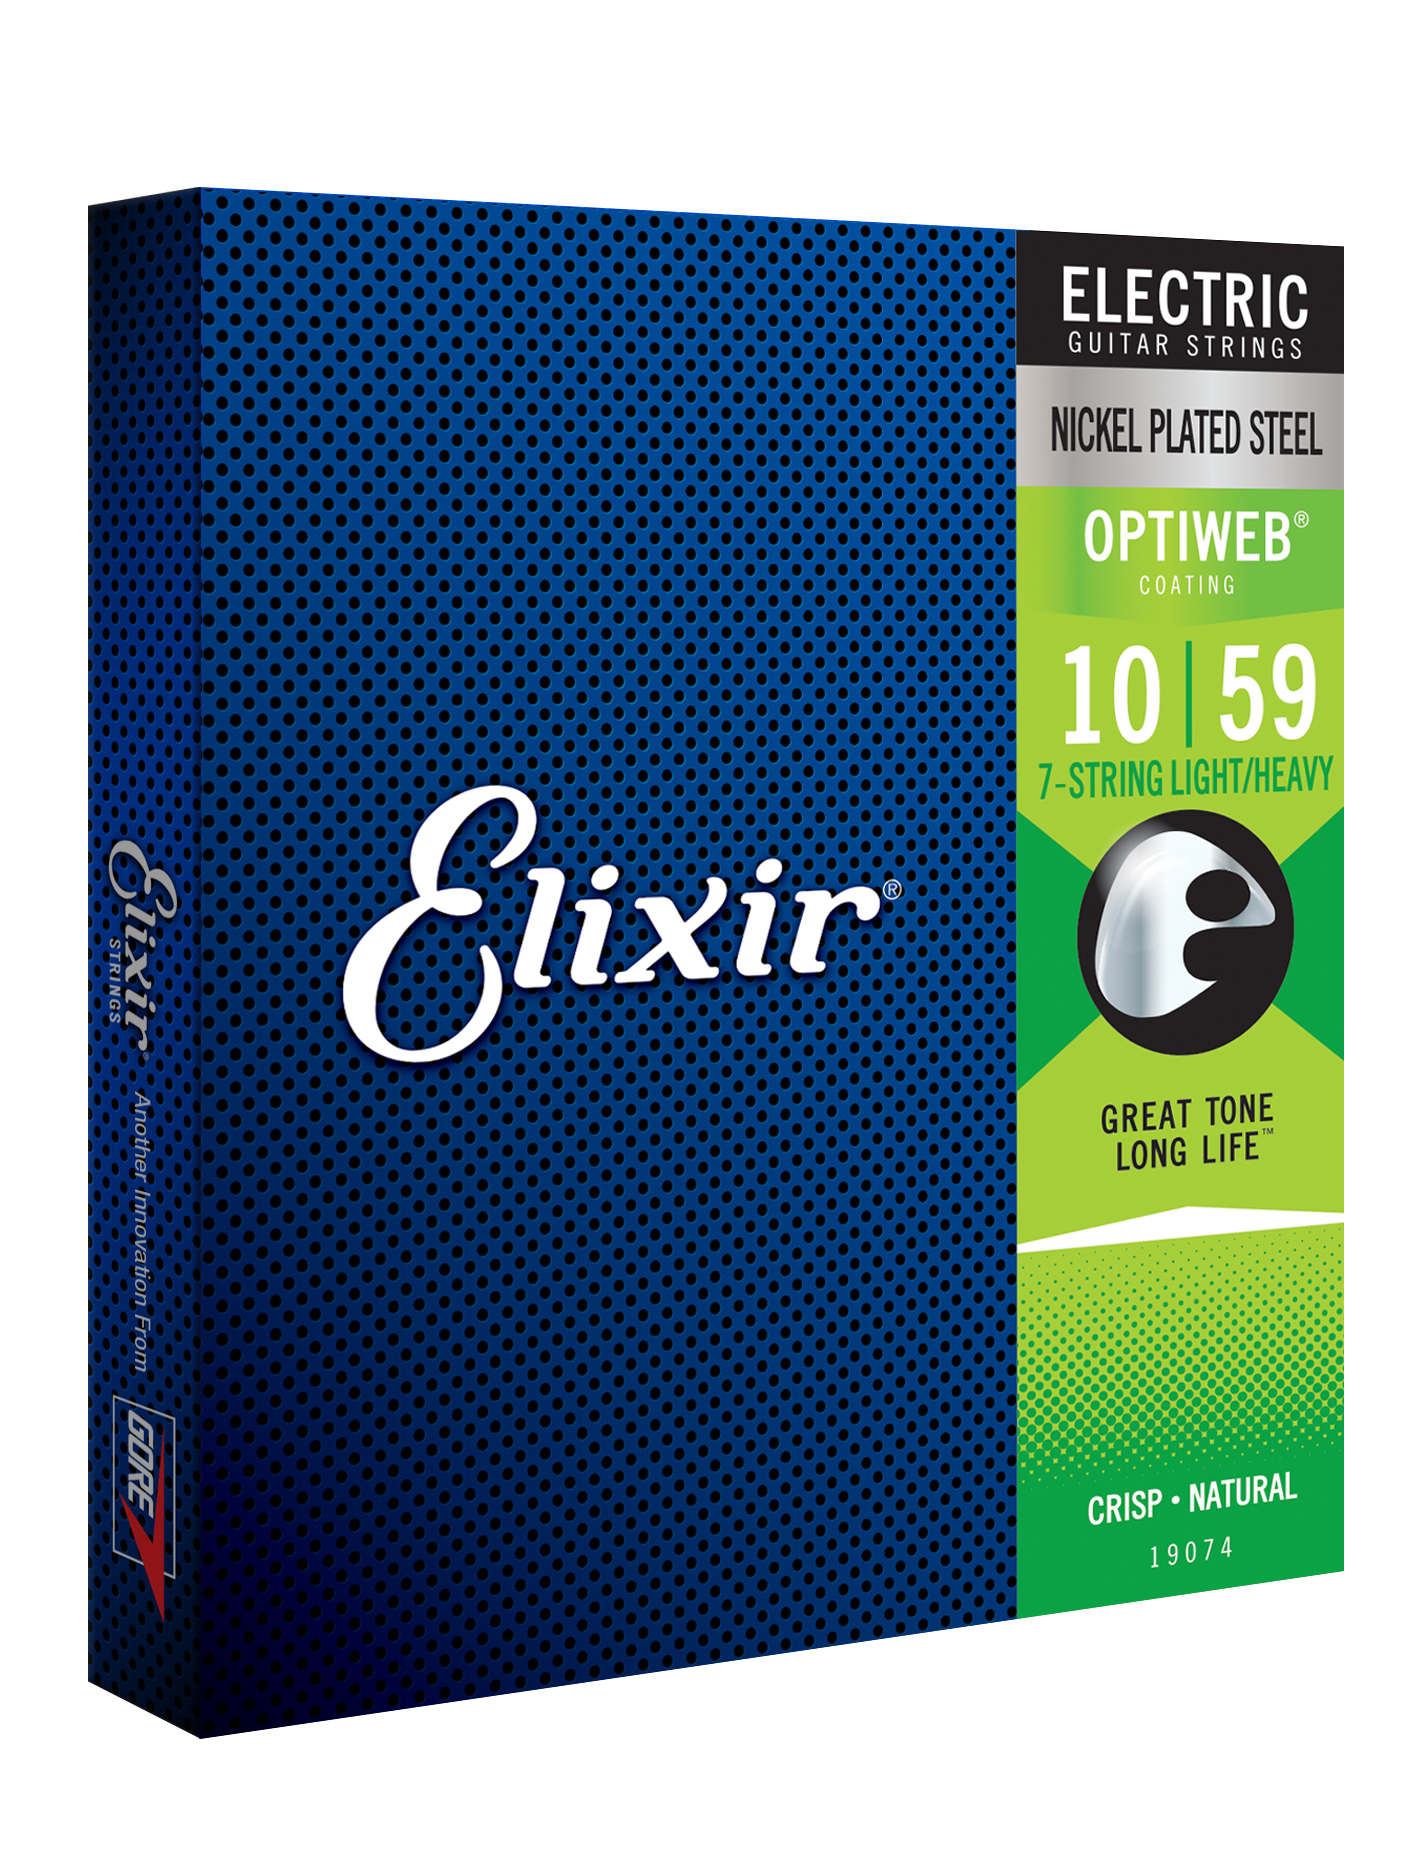 Elixir 19074 7-string Optiweb Nps Electric Guitar 7c Light/heavy 10-59 - Electric guitar strings - Variation 1